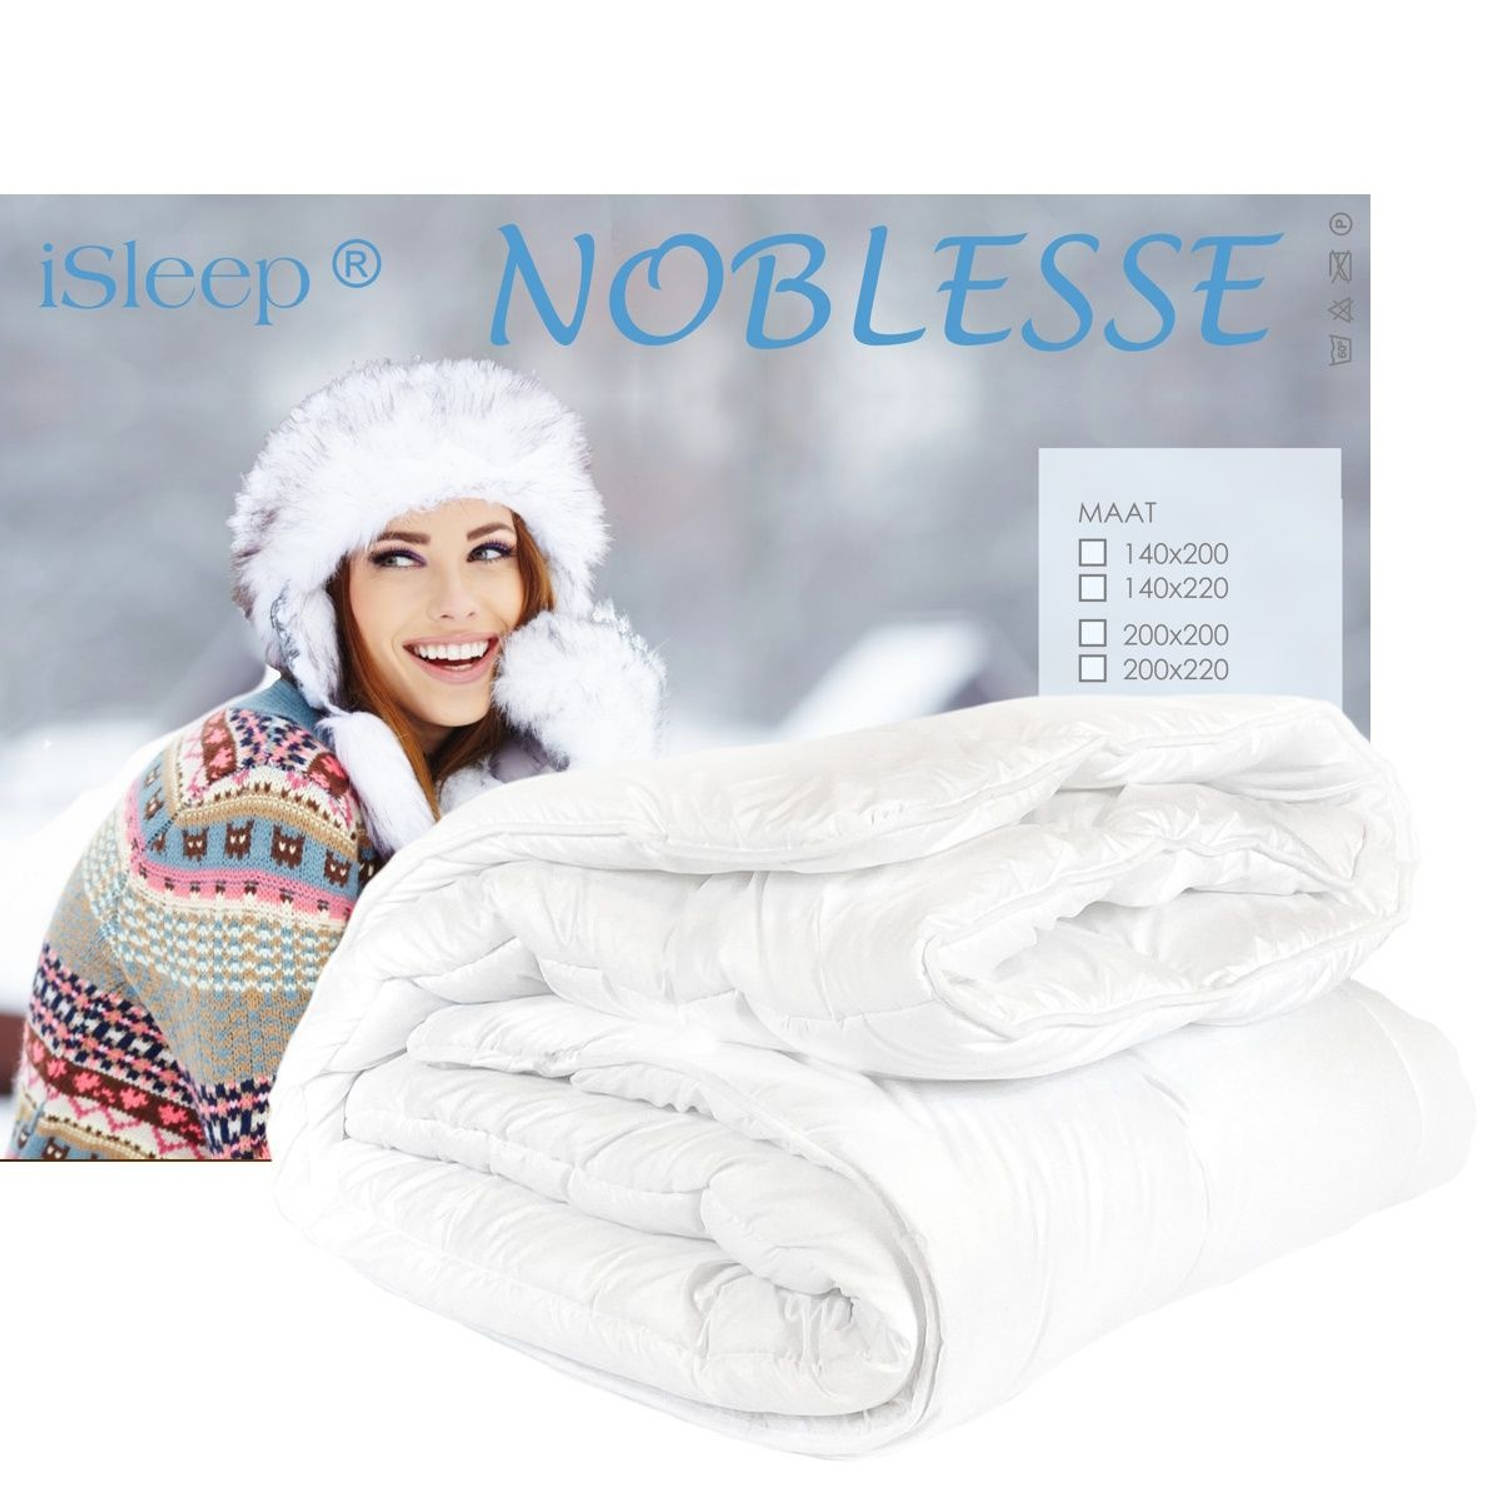 iSleep Noblesse Dekbed - Enkel - Litsjumeaux - 240x200 cm - Wit